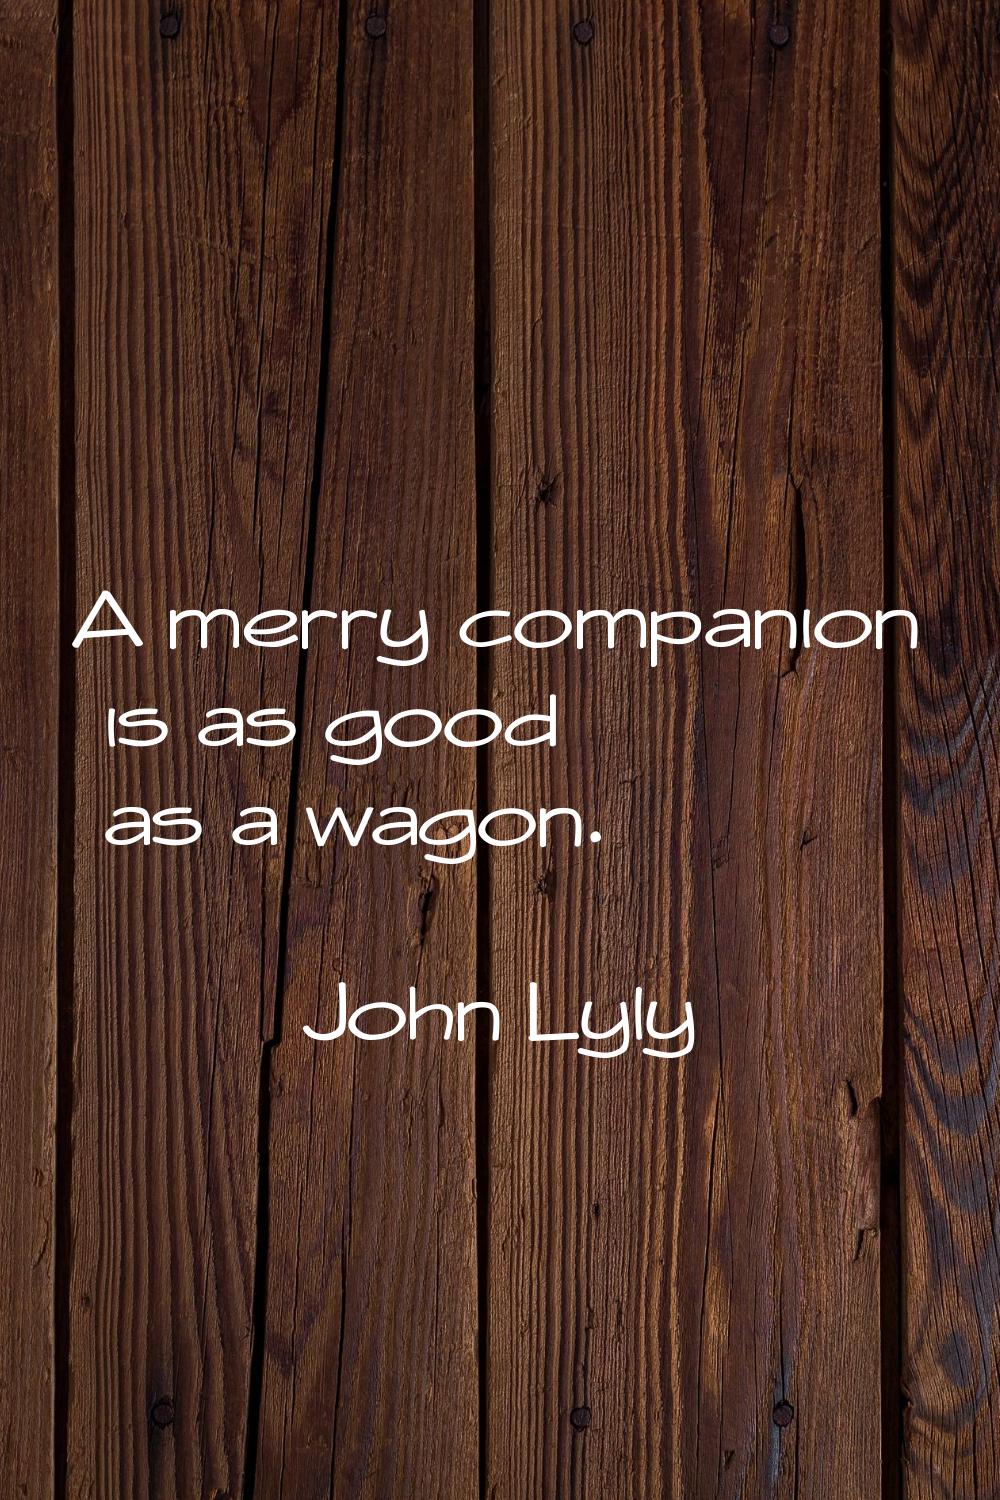 A merry companion is as good as a wagon.